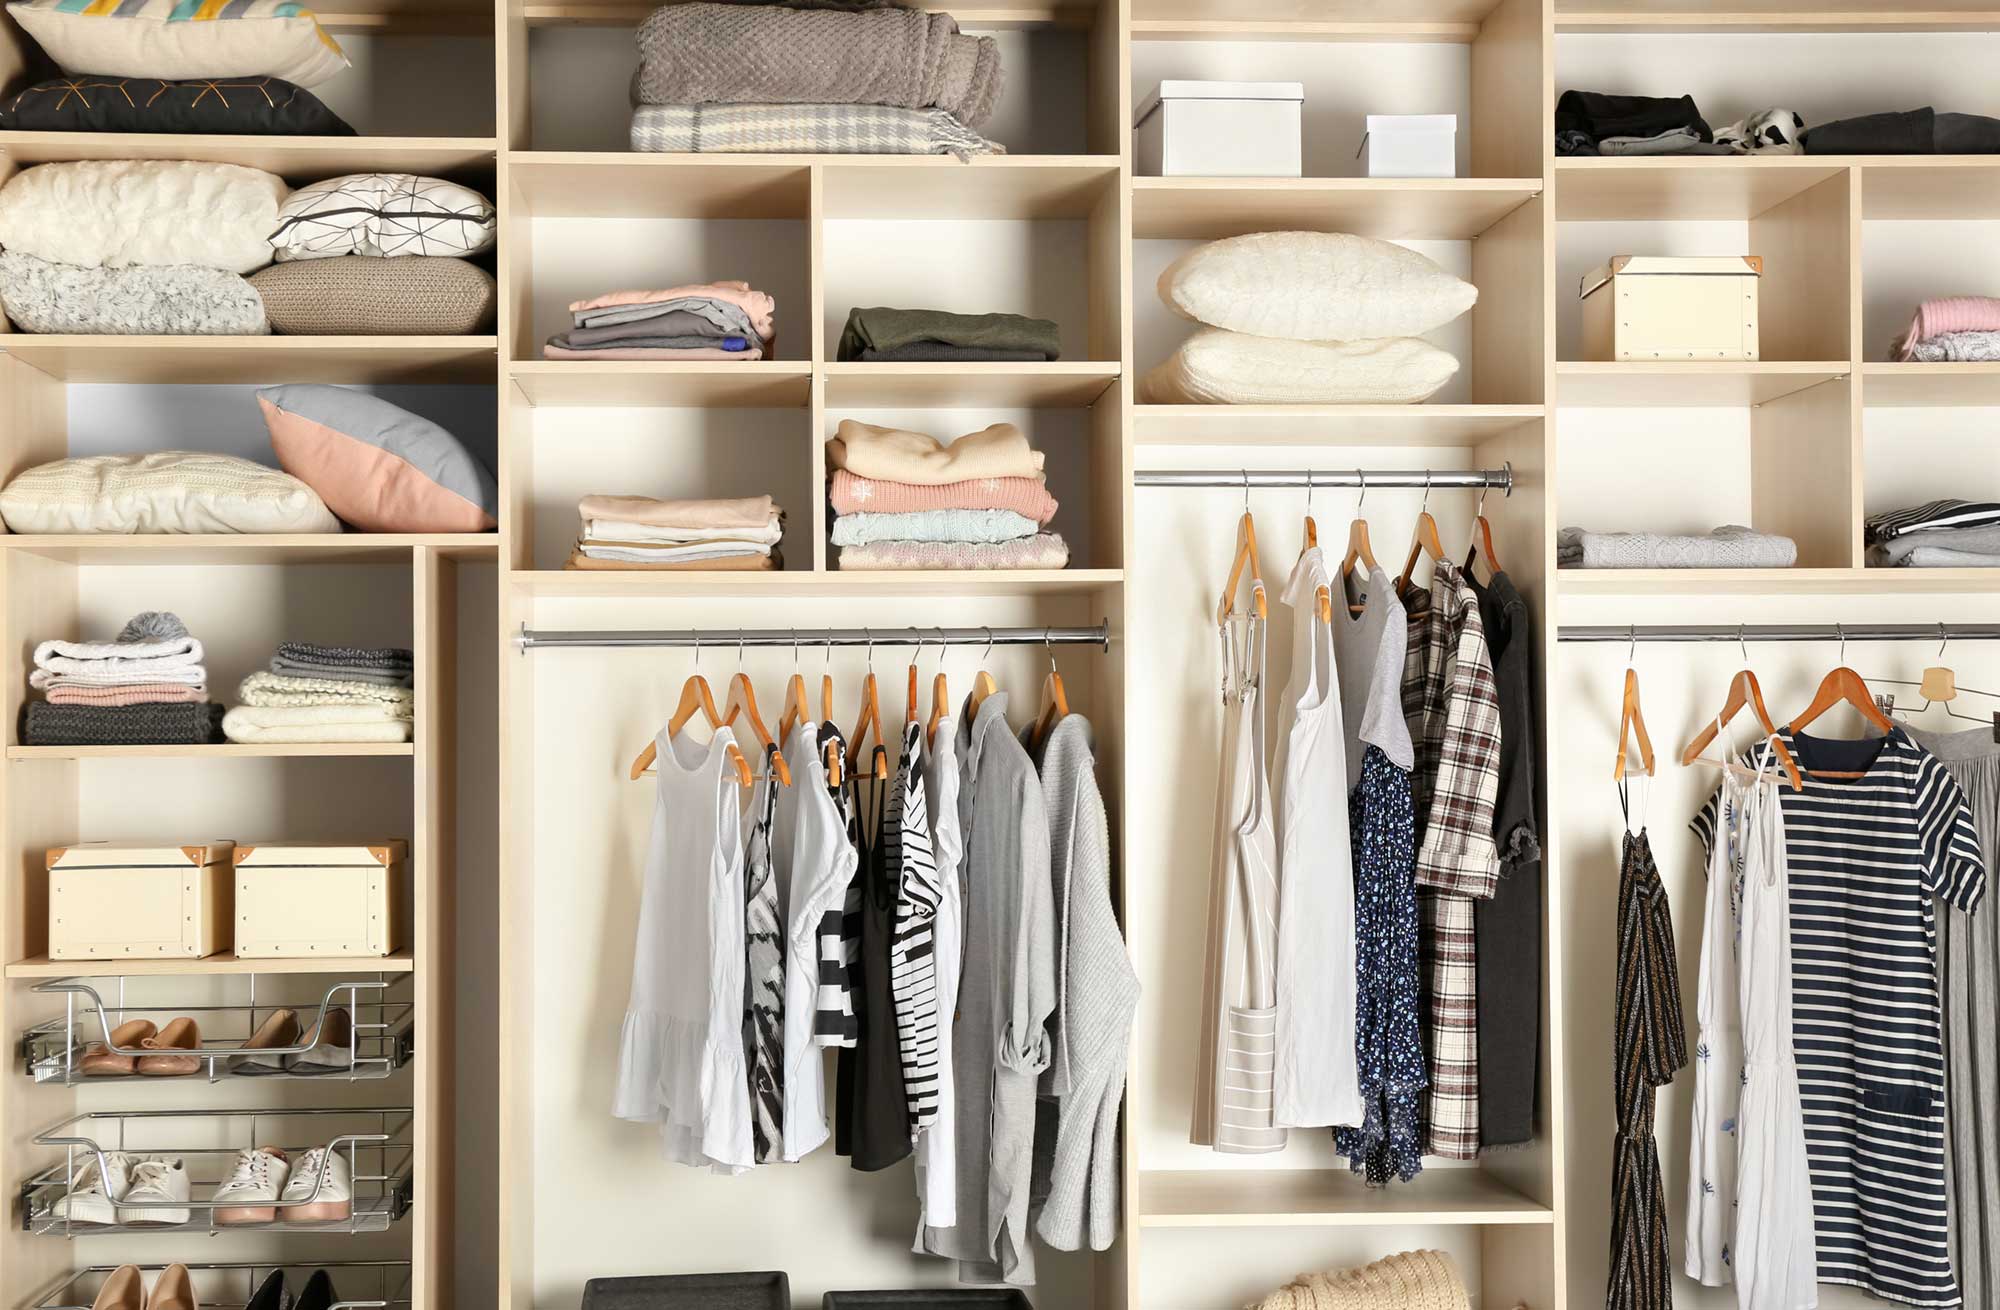 10 tips to Organize Your Closet